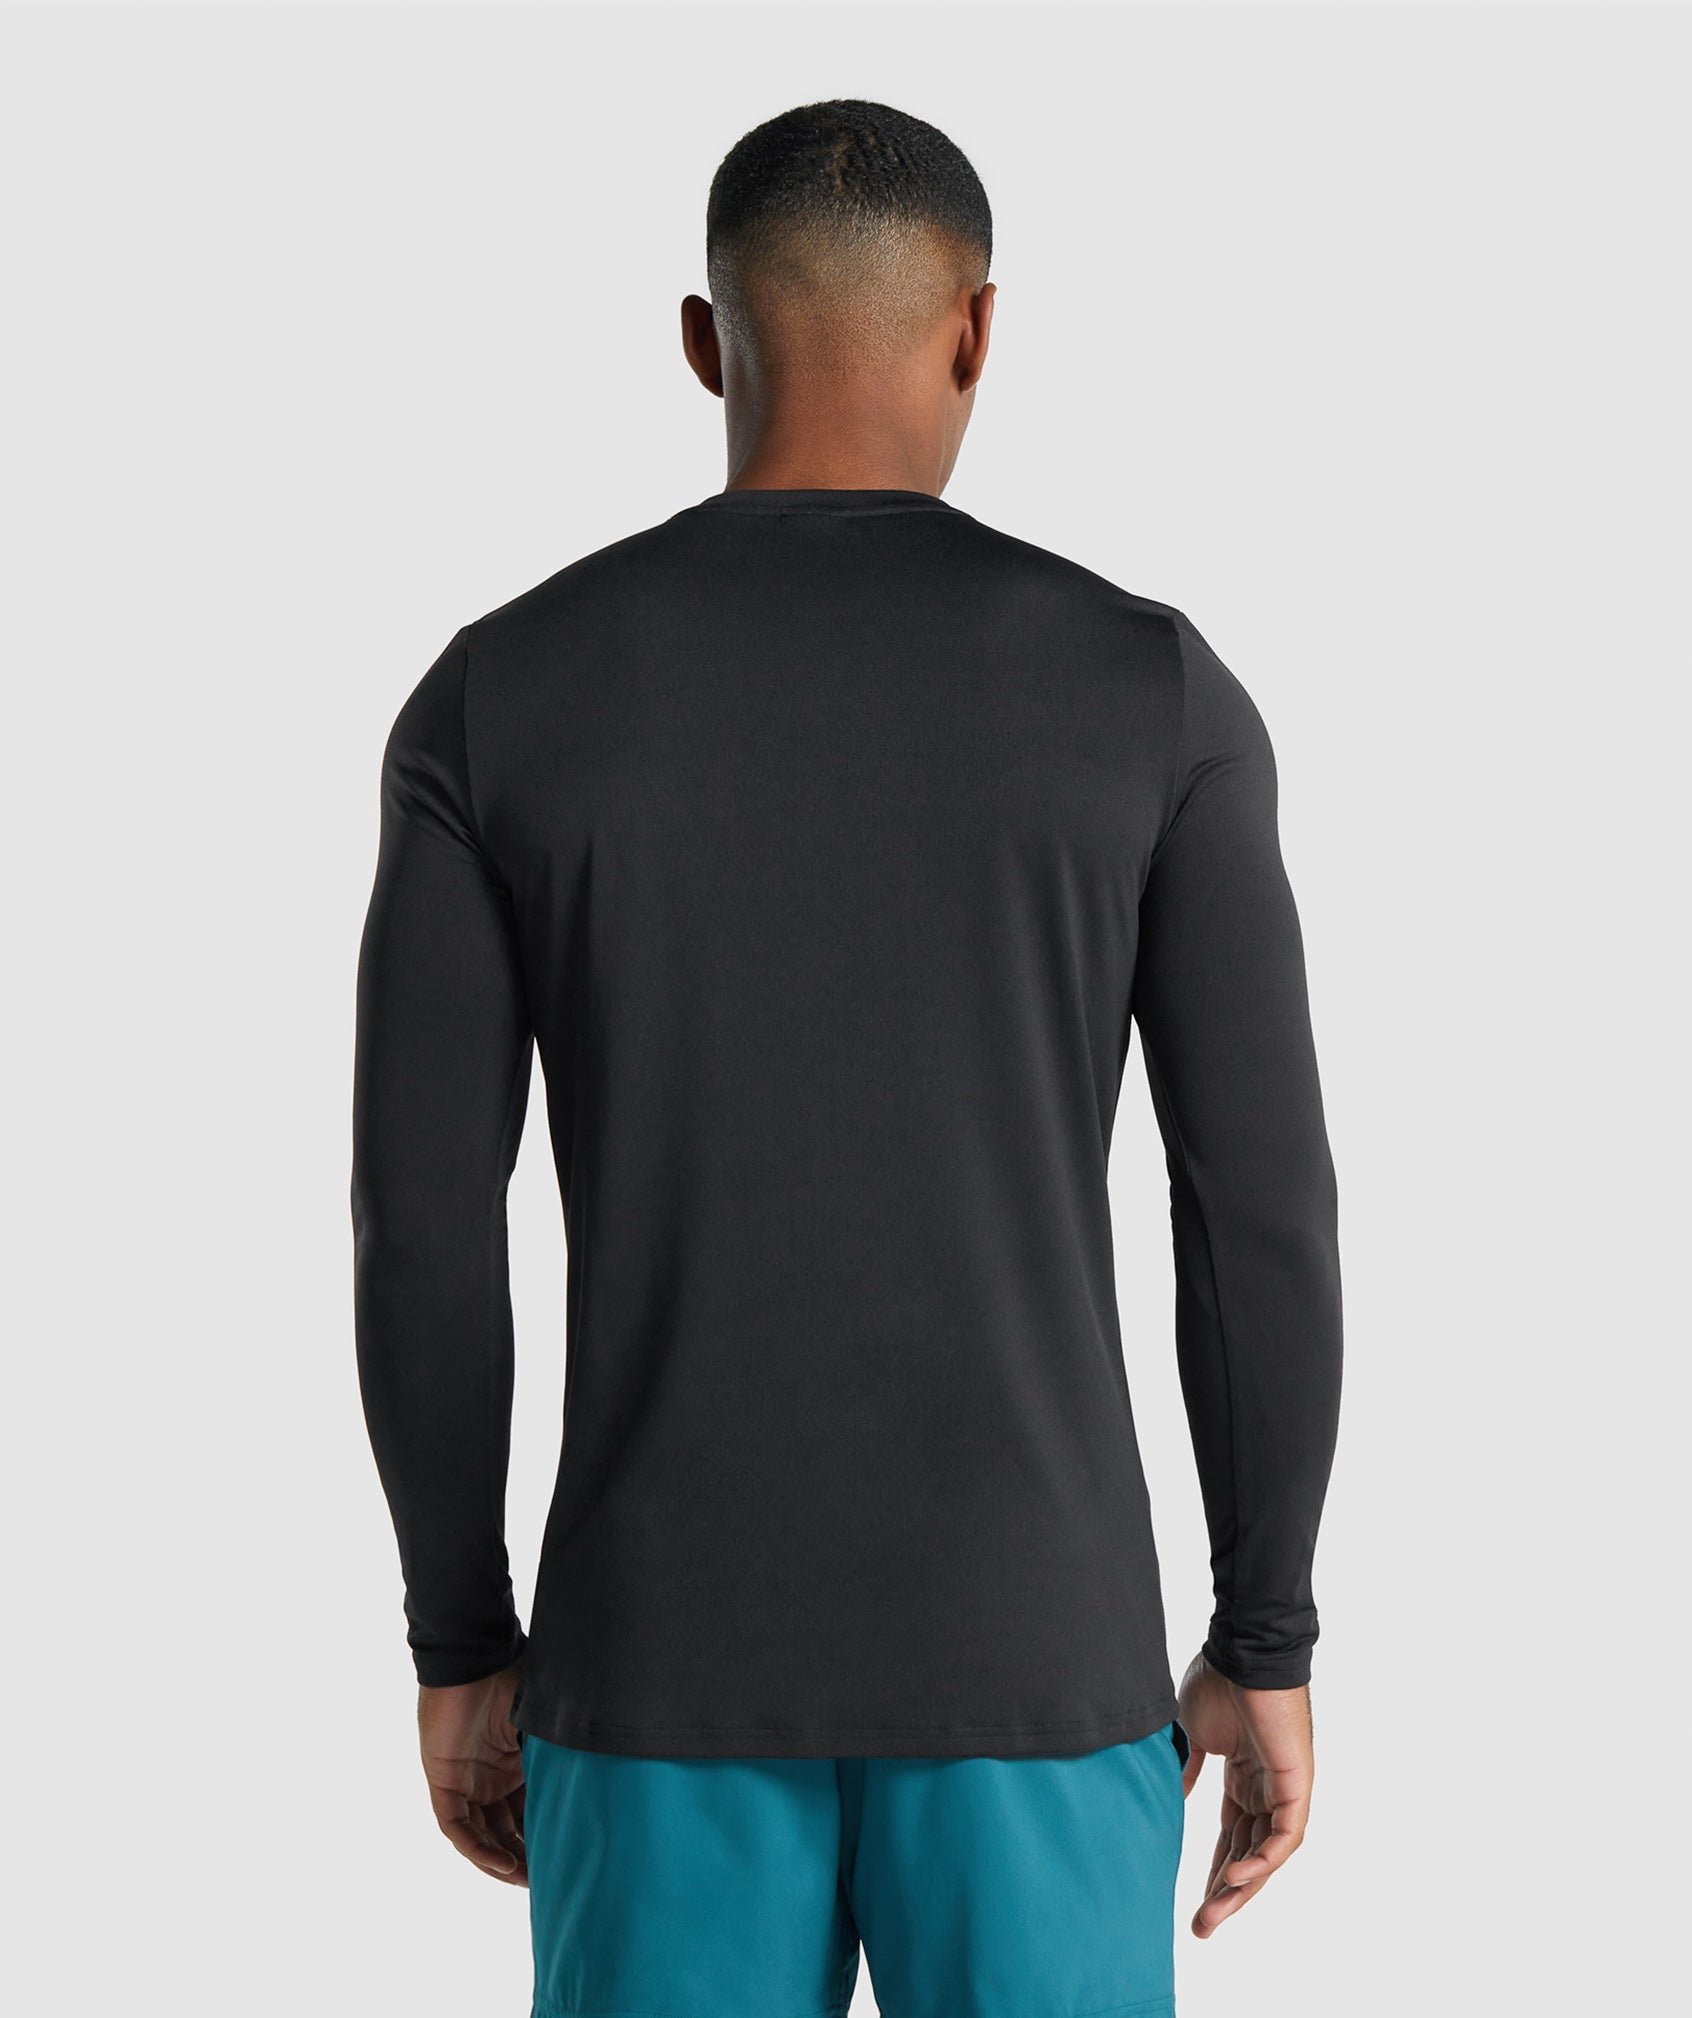 Gymshark Arrival Long Sleeve Graphic T-Shirt - Black